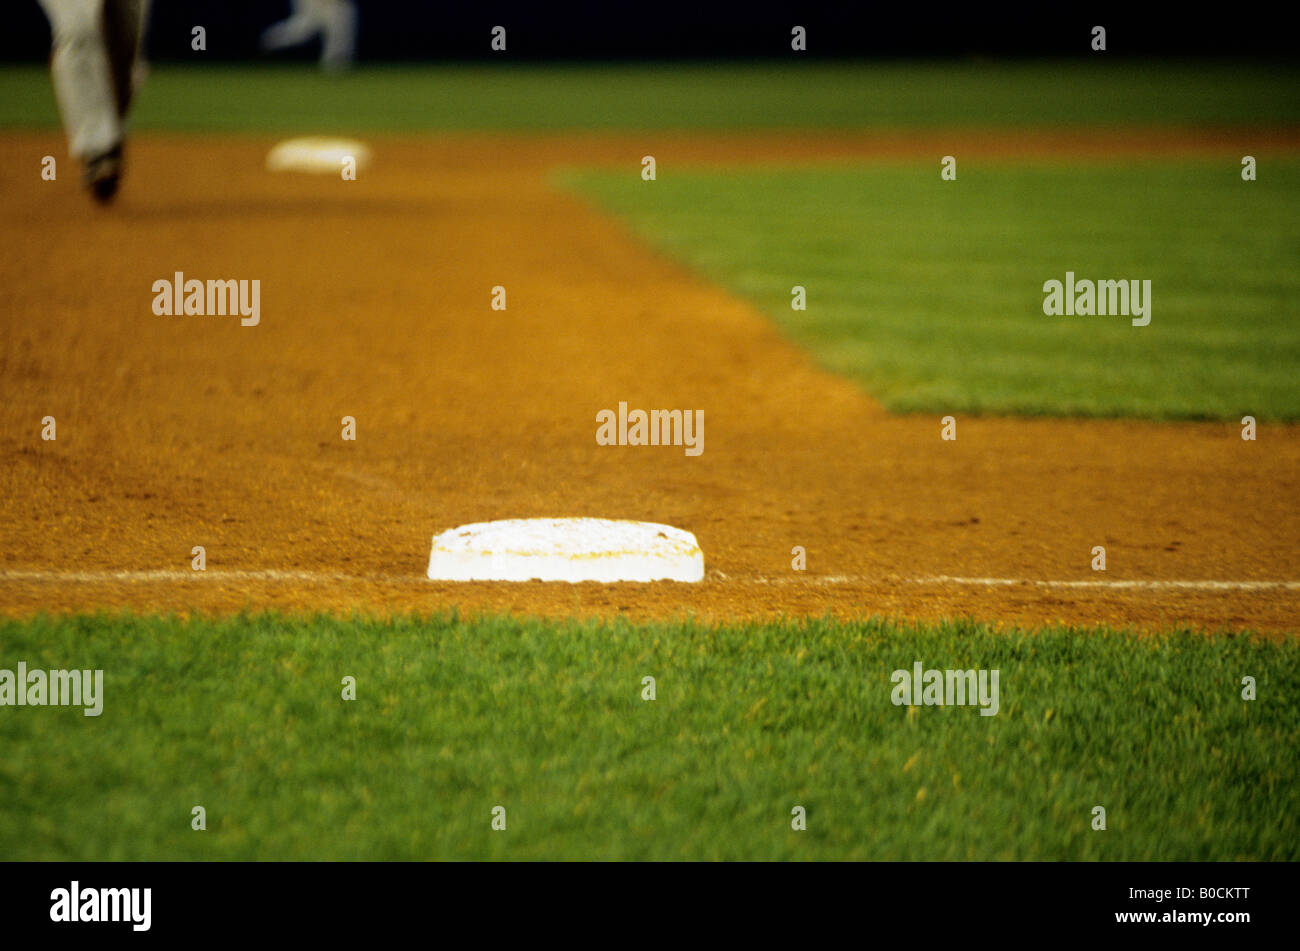 Base and Runner on Baseball Field Stock Photo